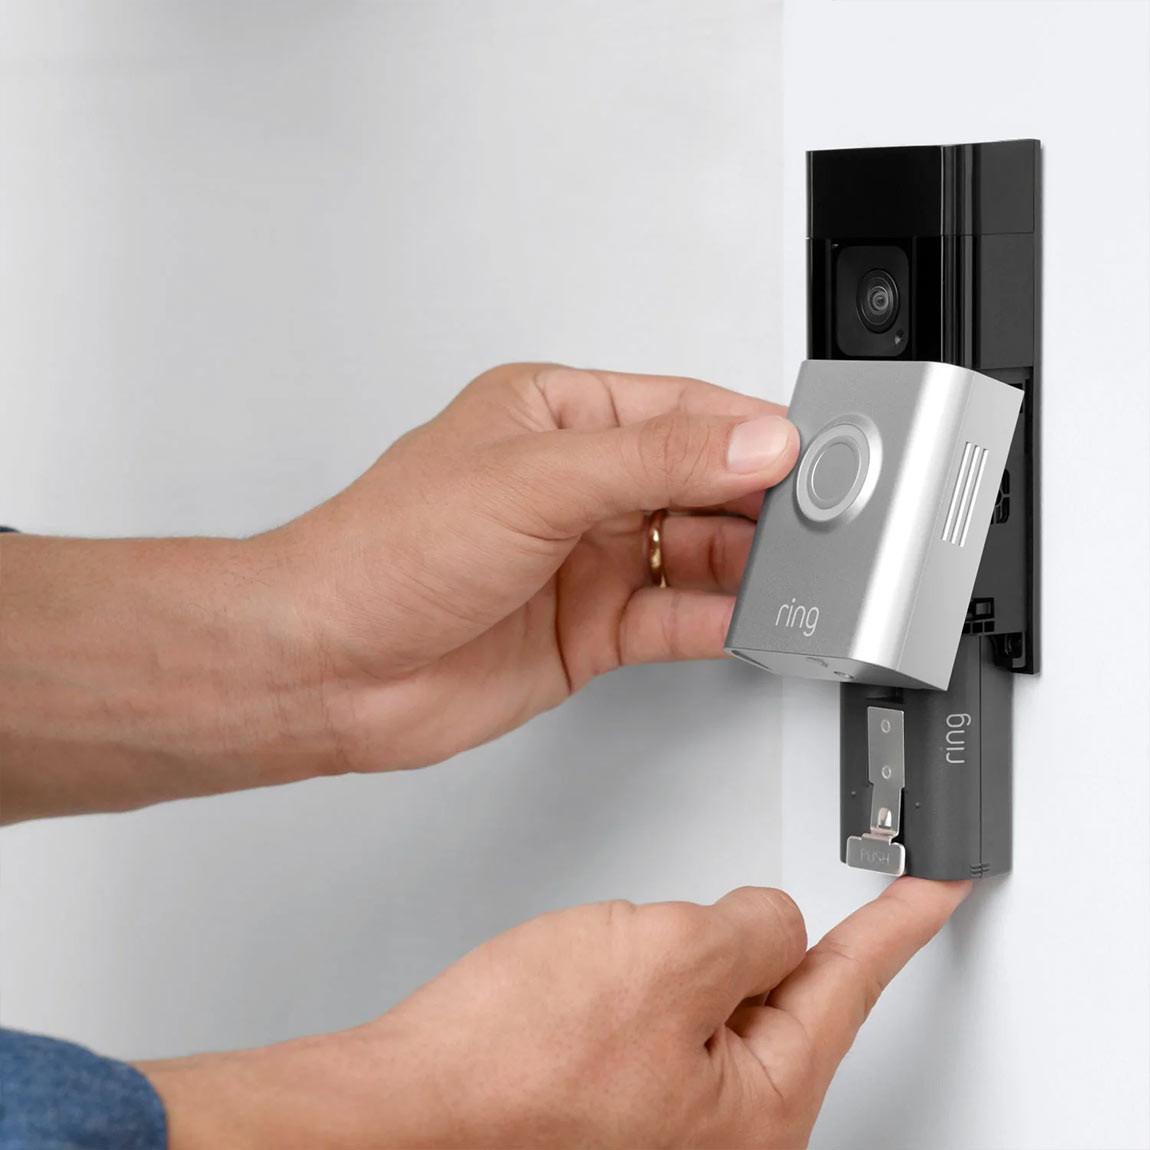 Ring Video Doorbell Plus + Stick Up Cam Battery (Gen. 3)